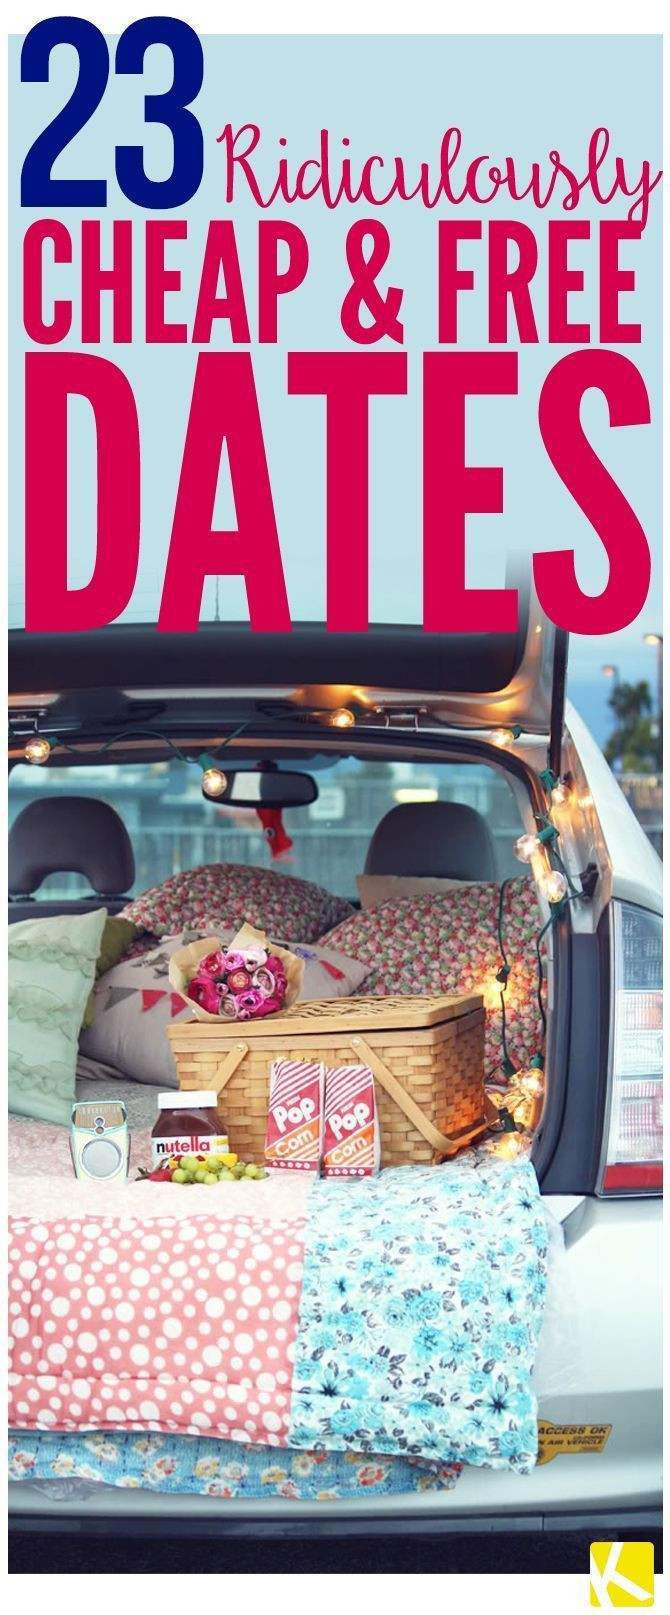 Inexpensive Gift Ideas For Boyfriend
 Best 25 Boyfriend t ideas ideas on Pinterest